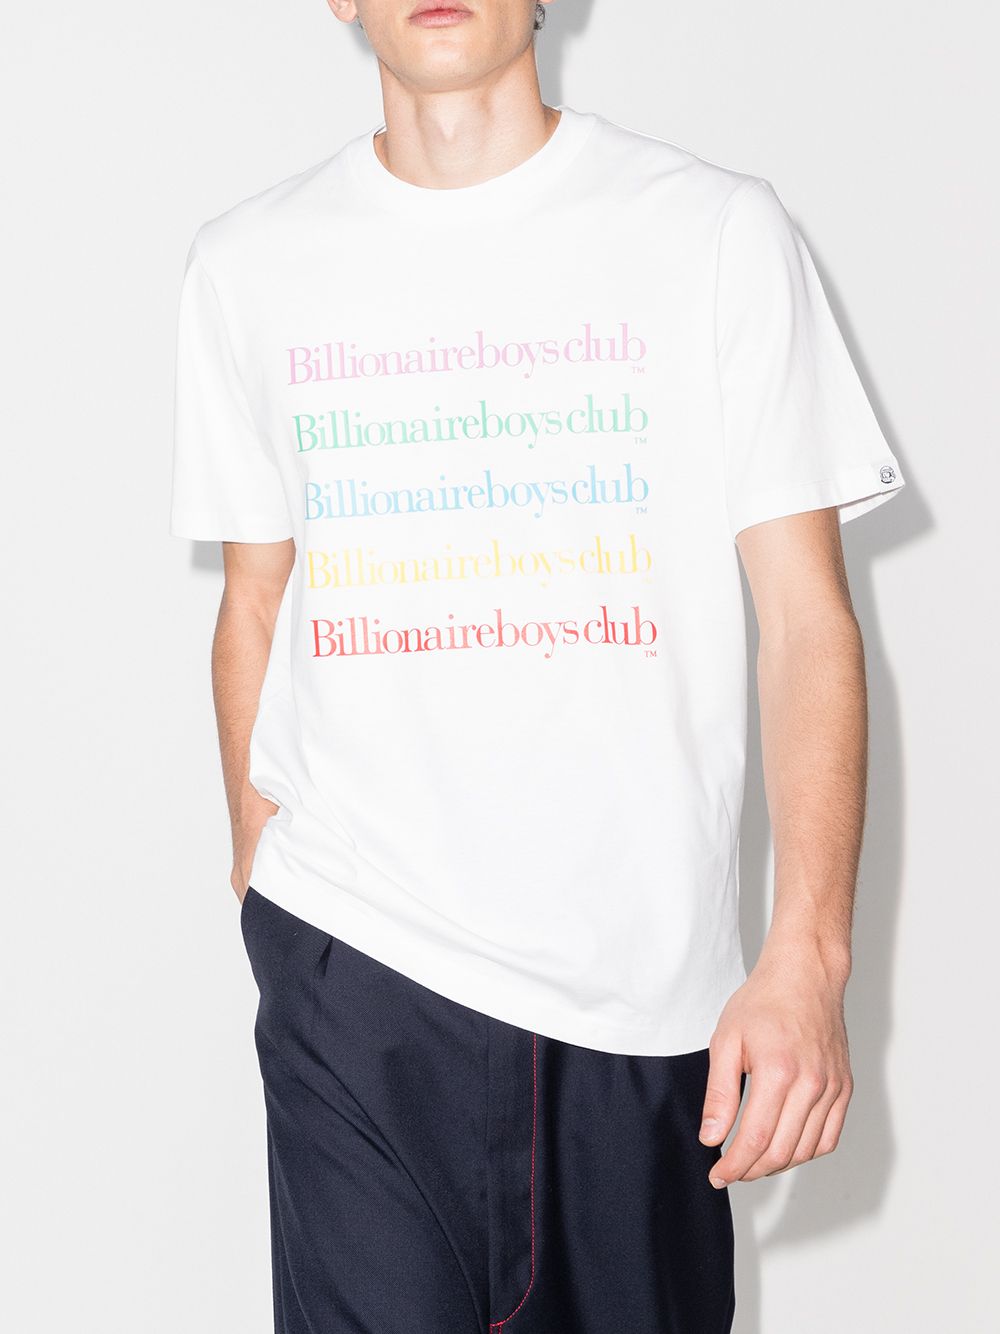 фото Billionaire boys club футболка с логотипом